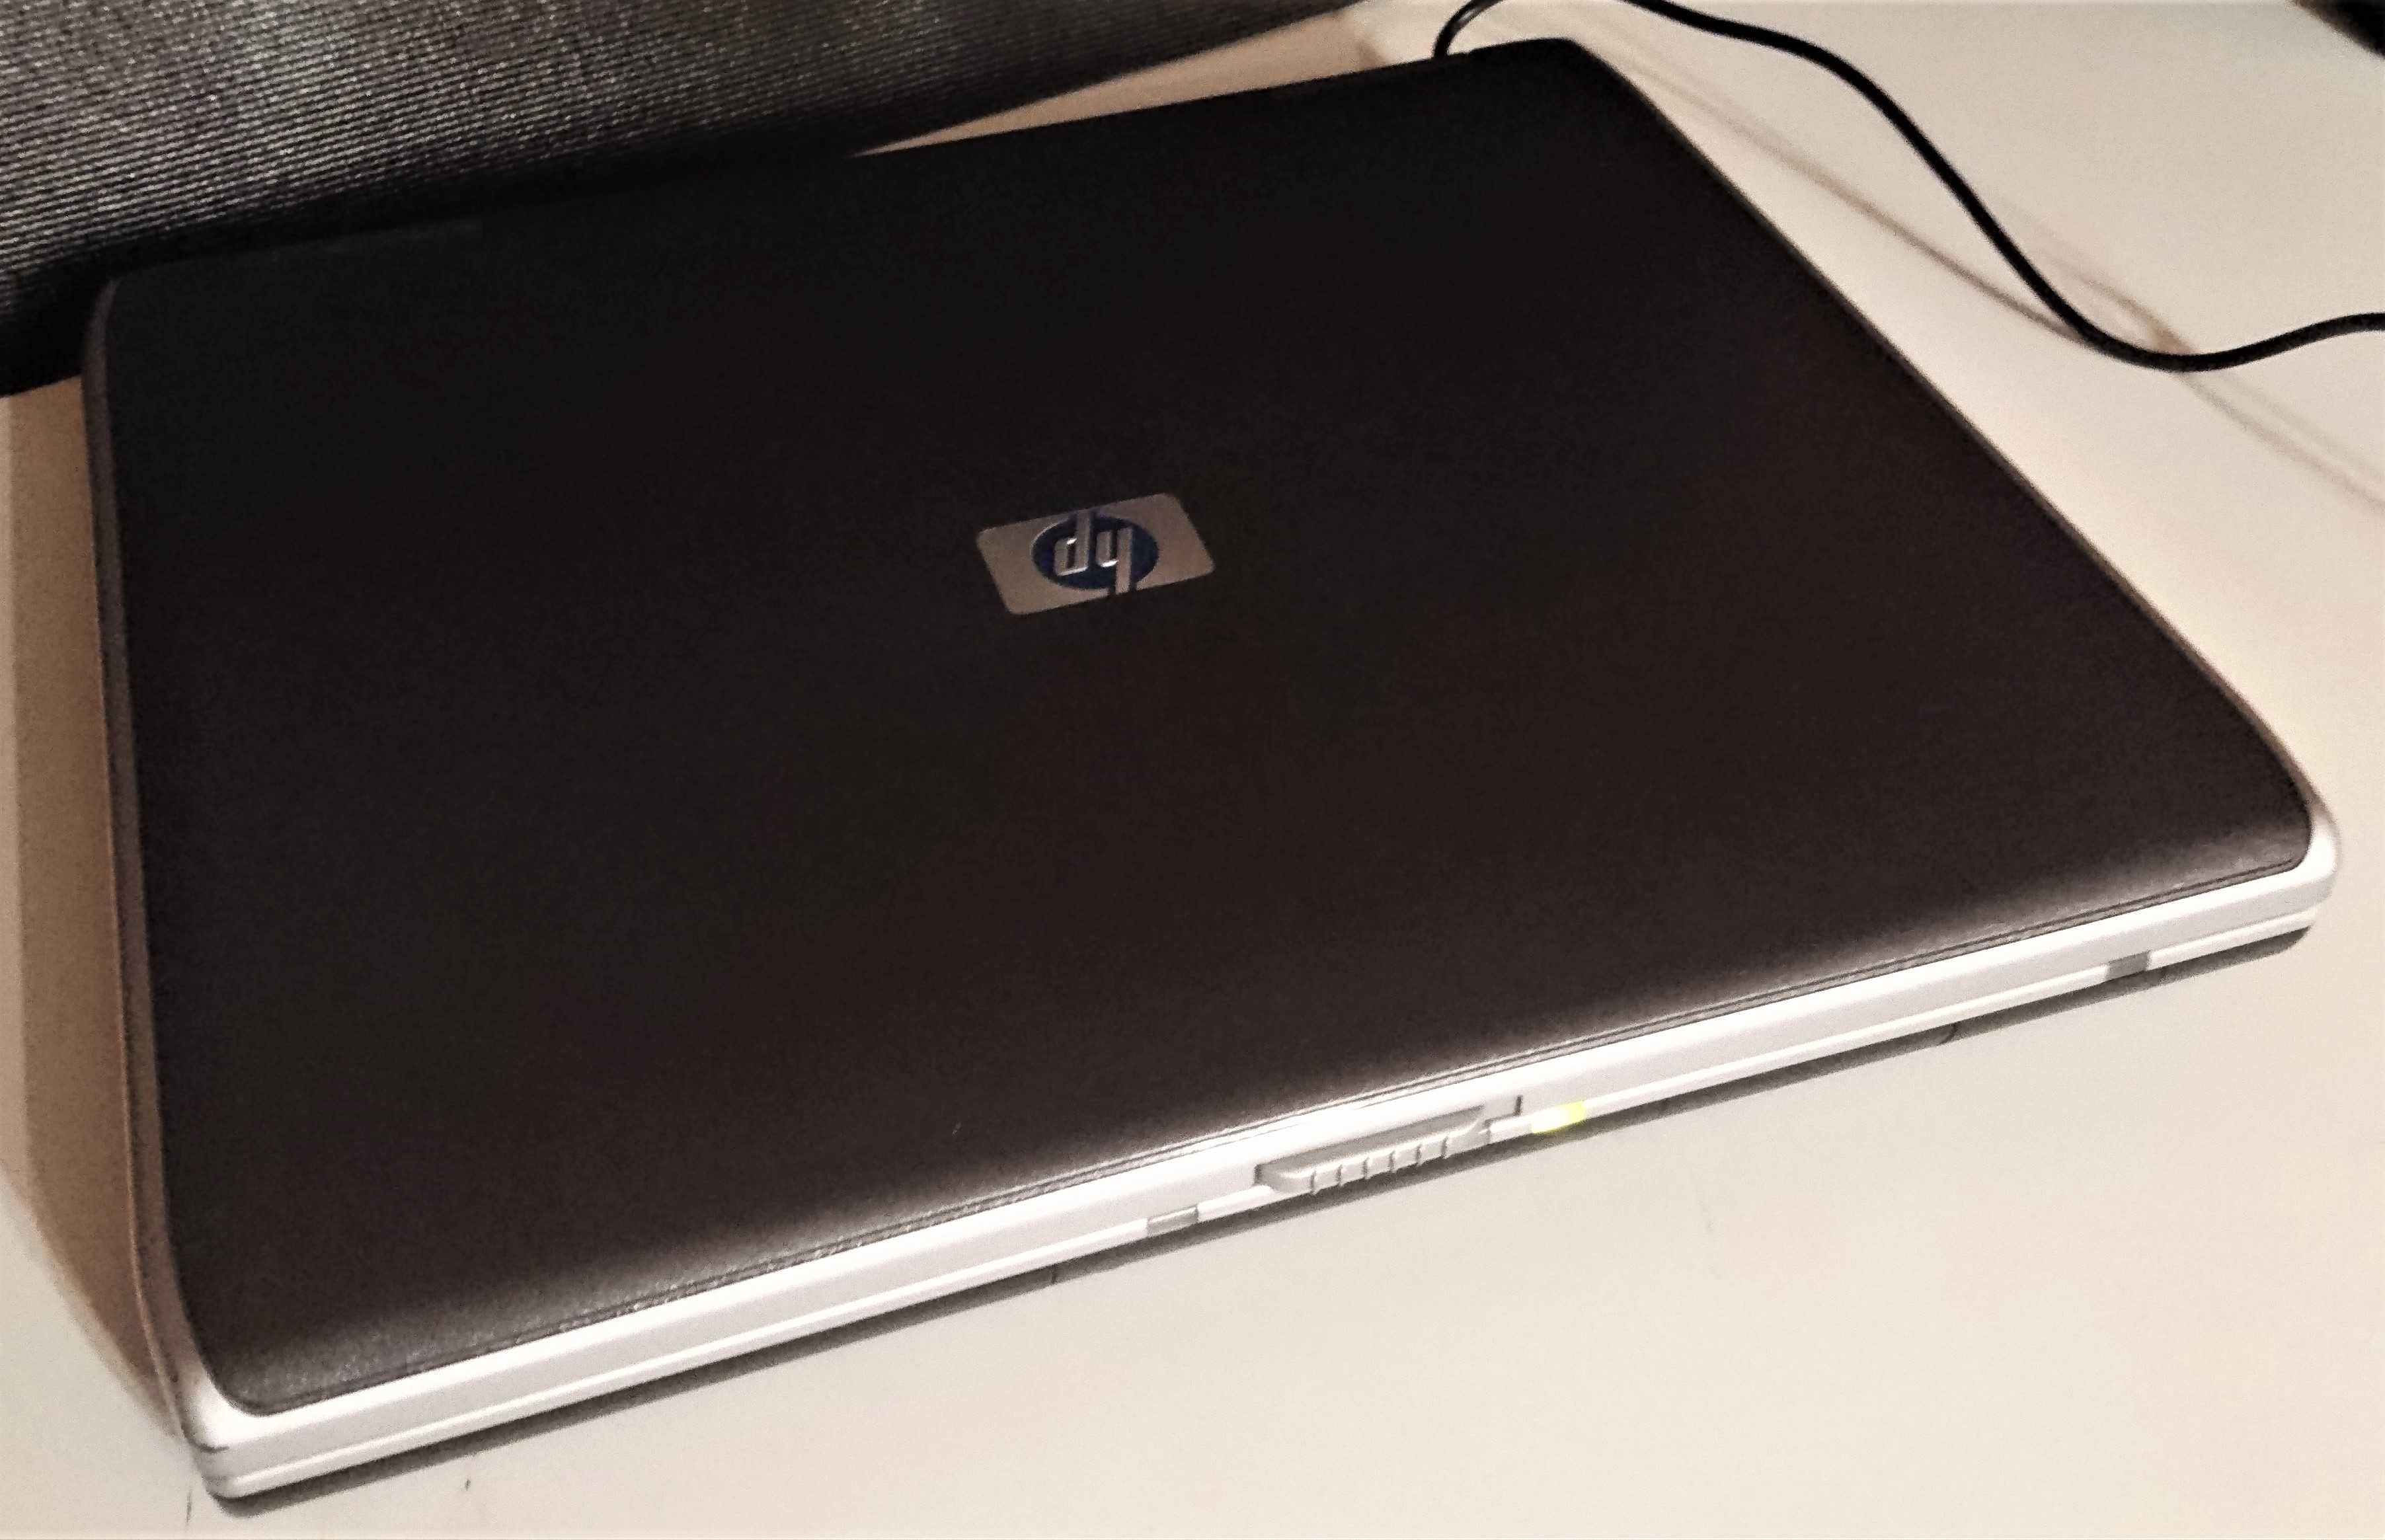 Laptop HP Compaq nx 9020